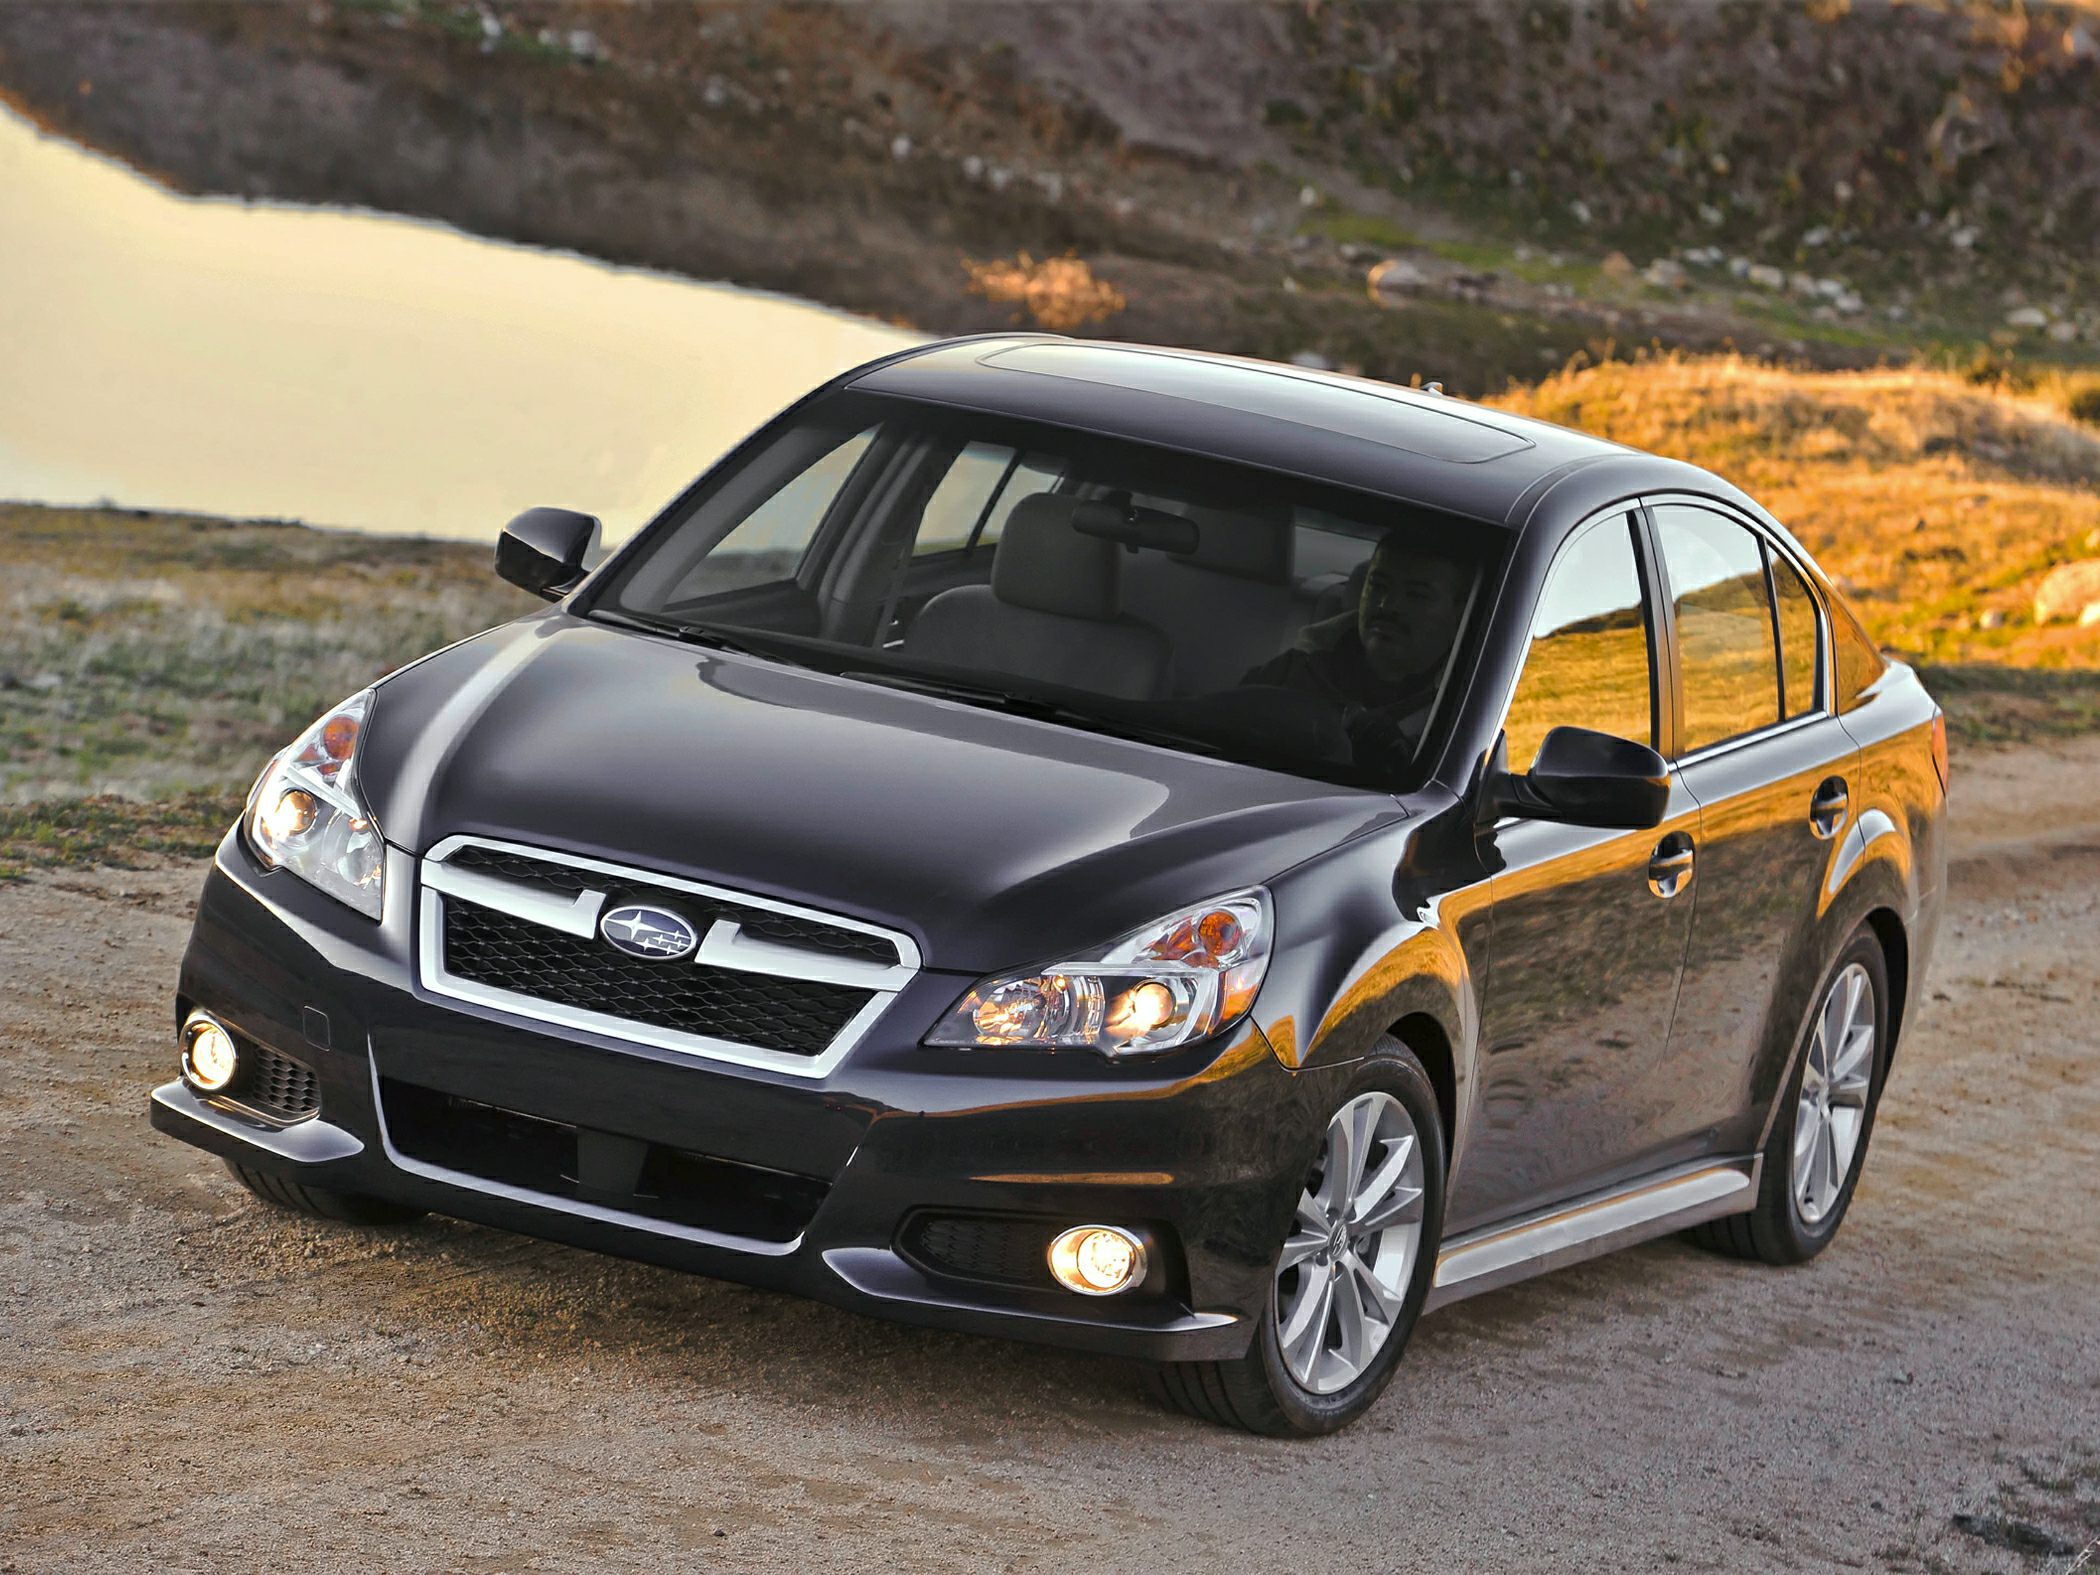 Subaru Legacy 2014 #1